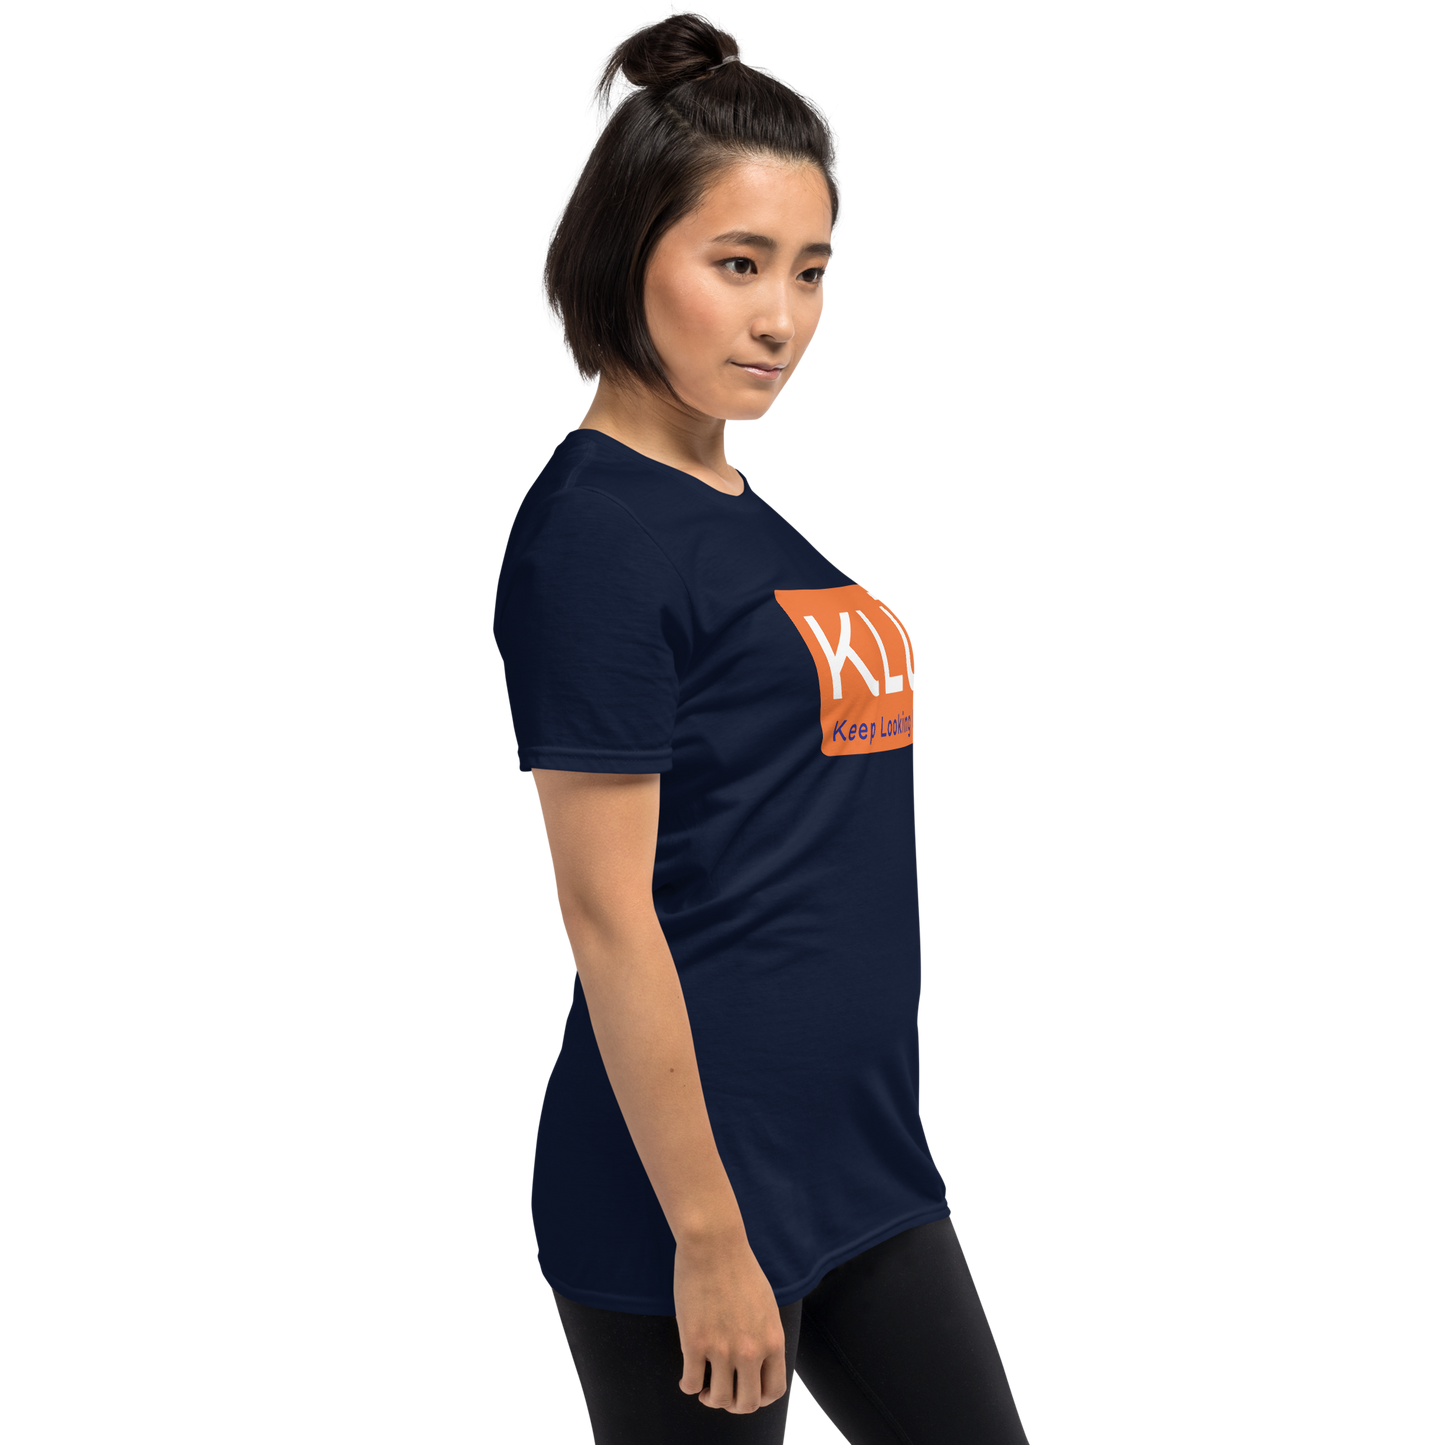 KLŪ Keep Looking Up | Unisex | Basic | Short-sleeve T-shirt